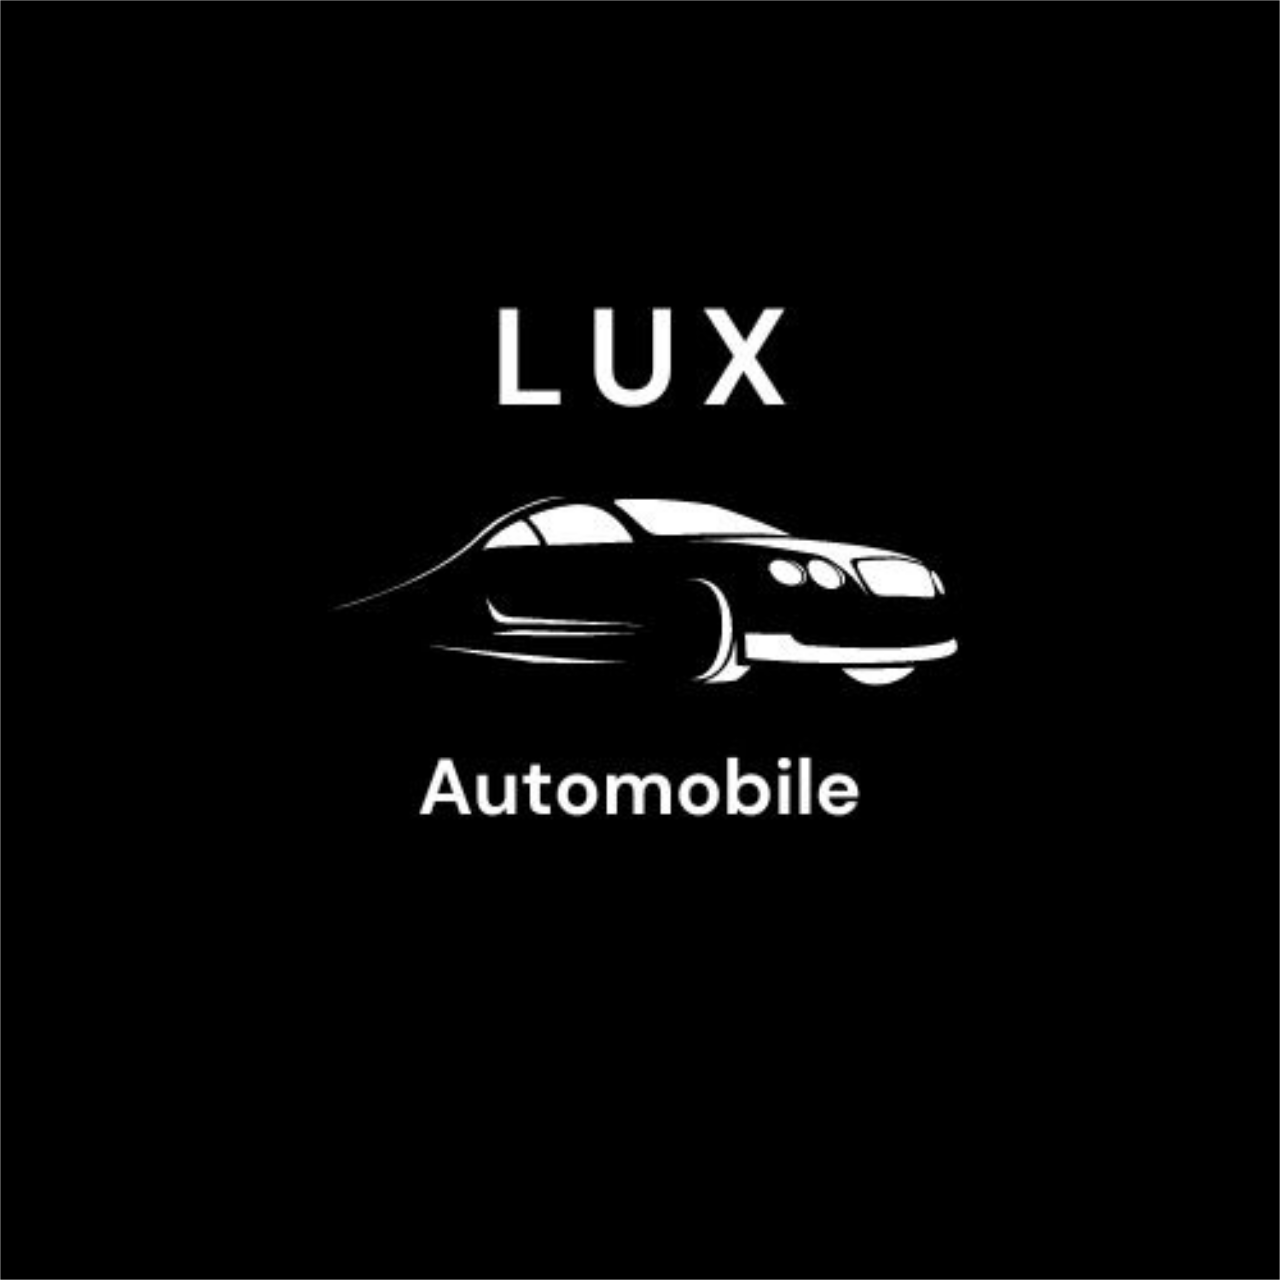 LUX Automobile's logo